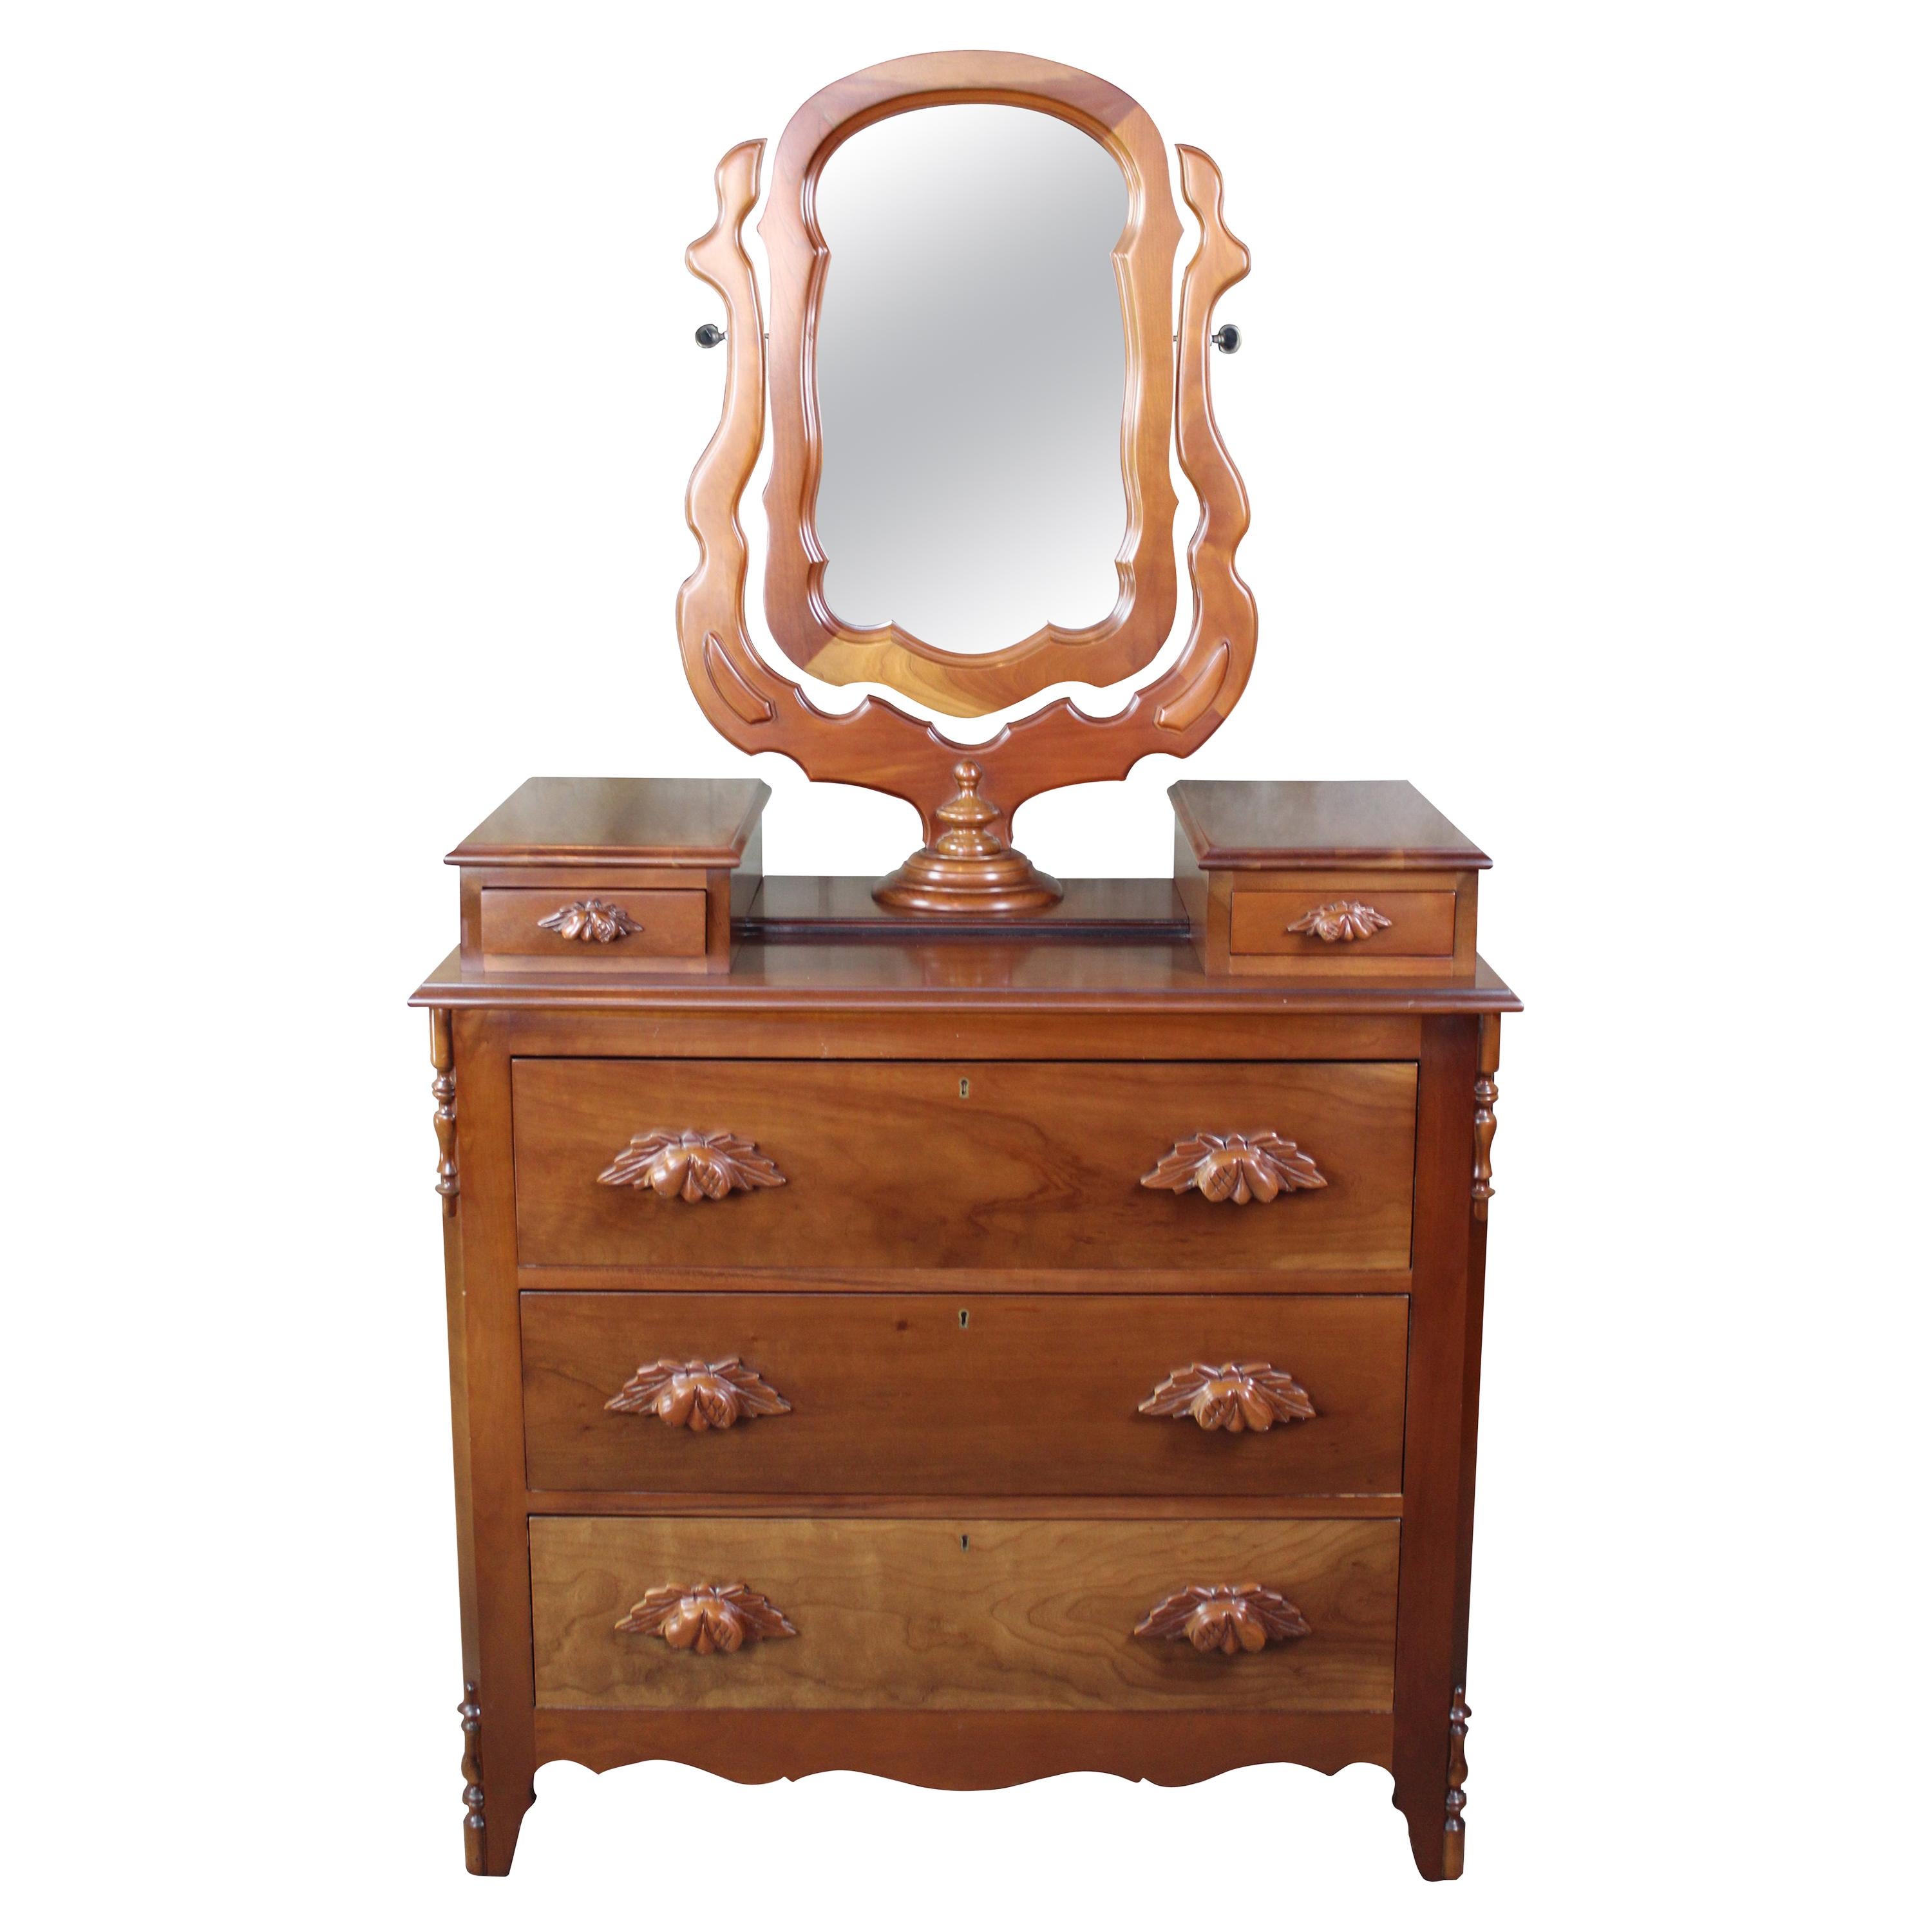 Cassady Furniture Victorian Revival Cherry Carved Dresser and Wishbone Mirror